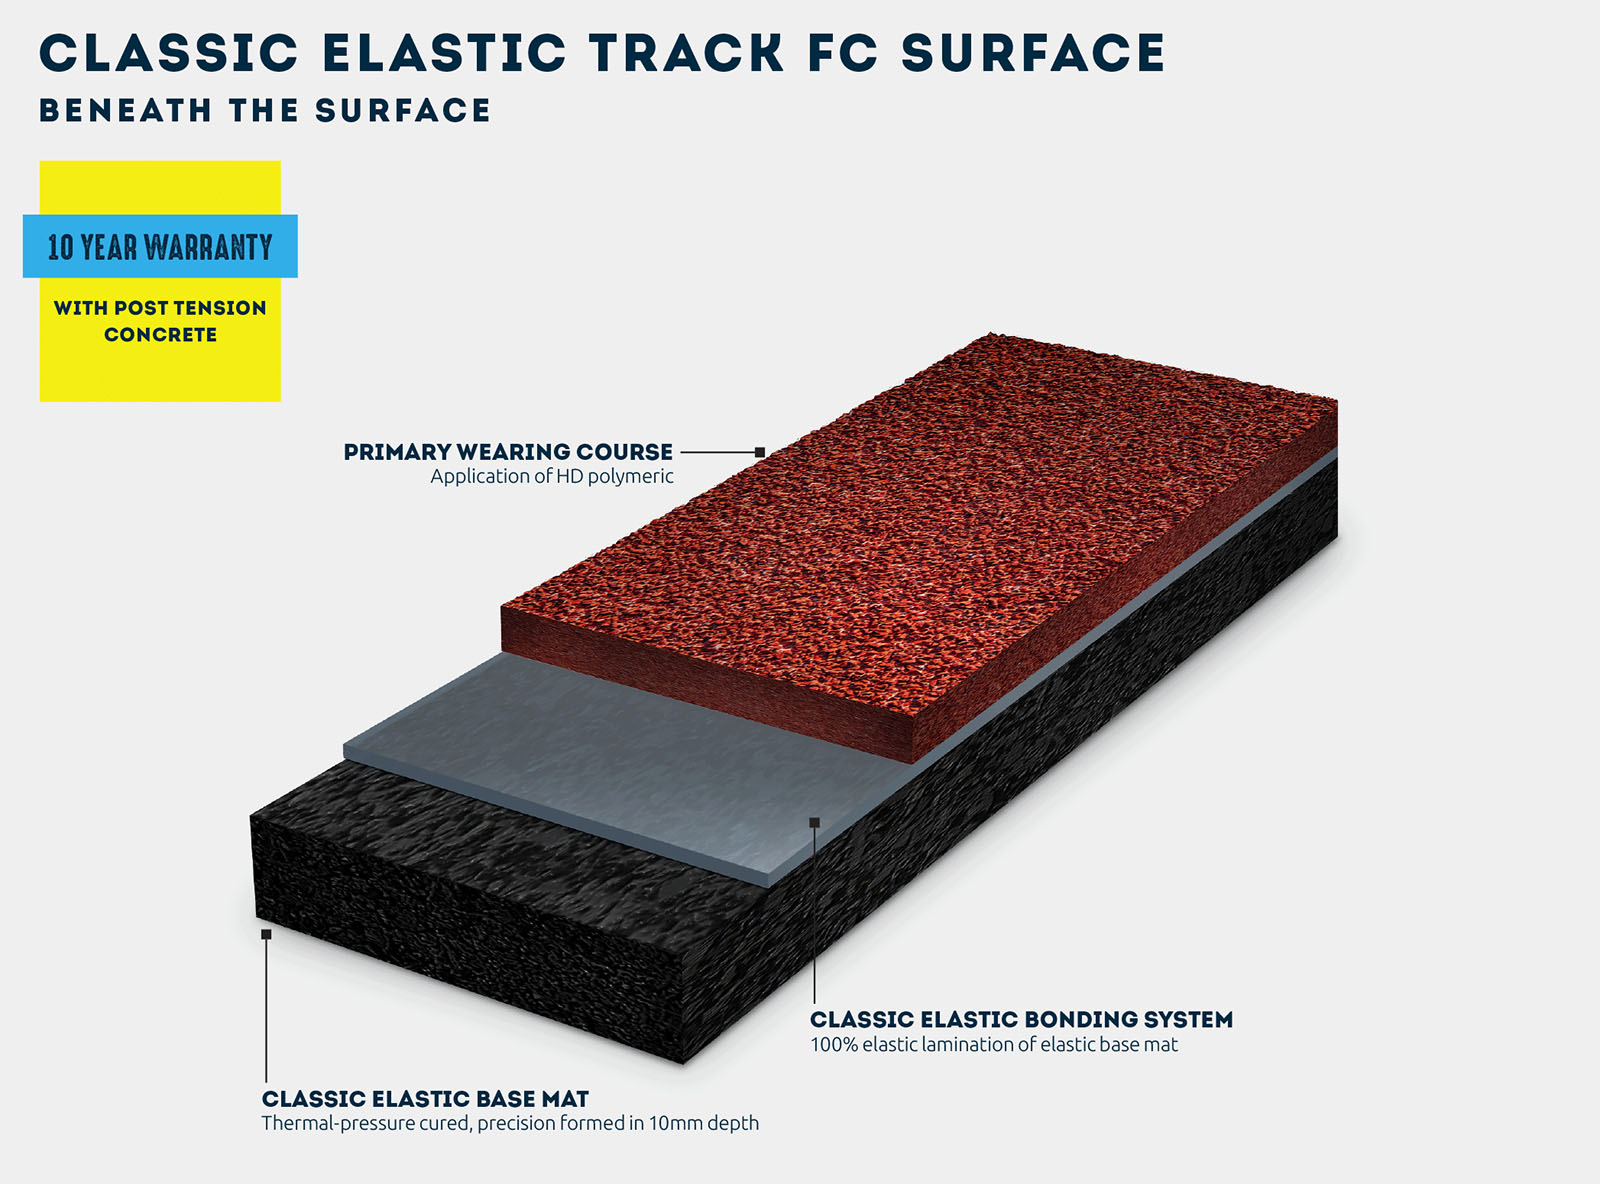 Classic elastic track FC surface